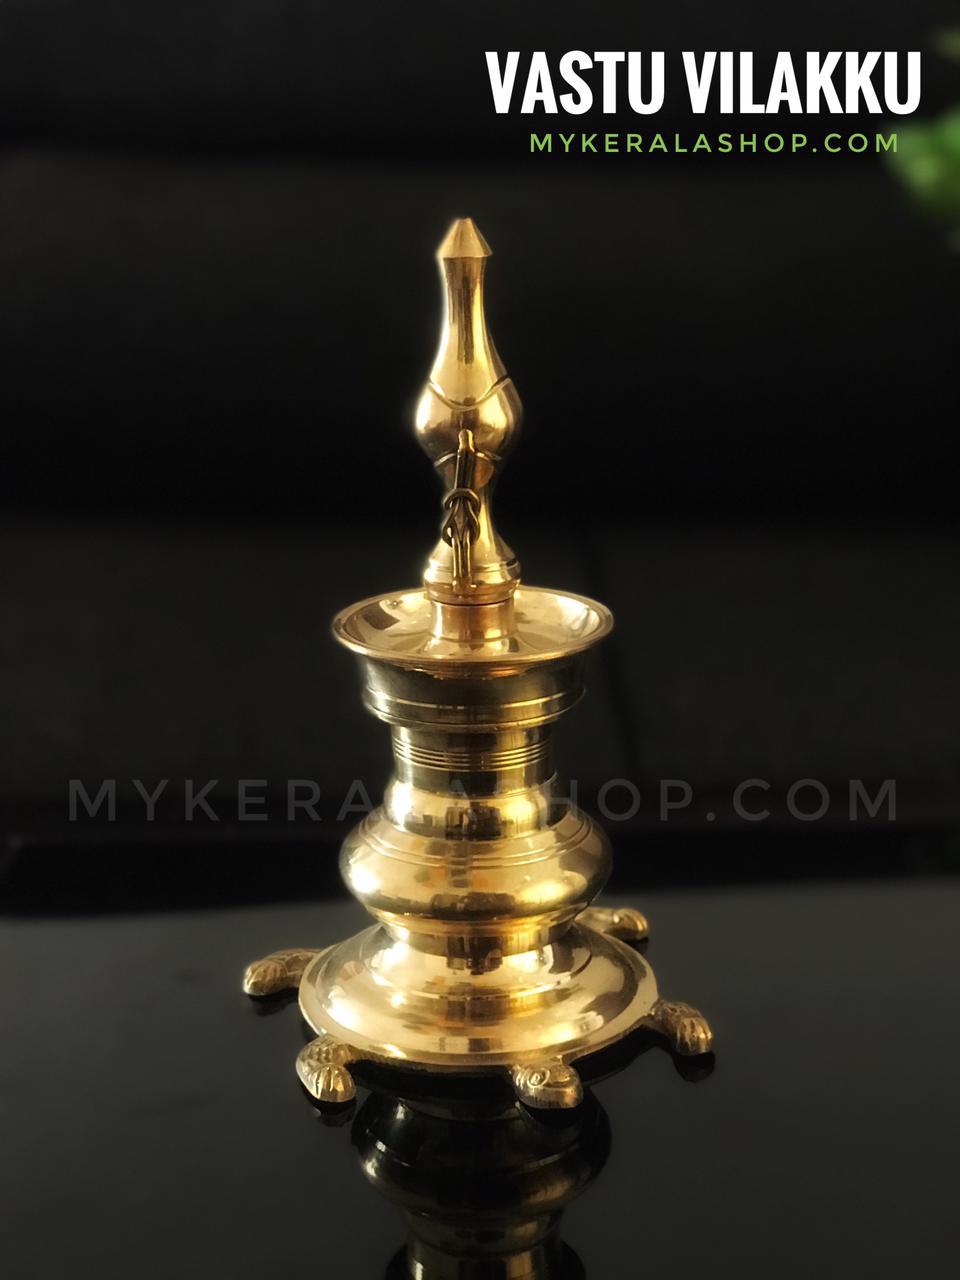 Vastu Vilakku - The sacred lamp For fixing vastu and giving prosperity to home & business!